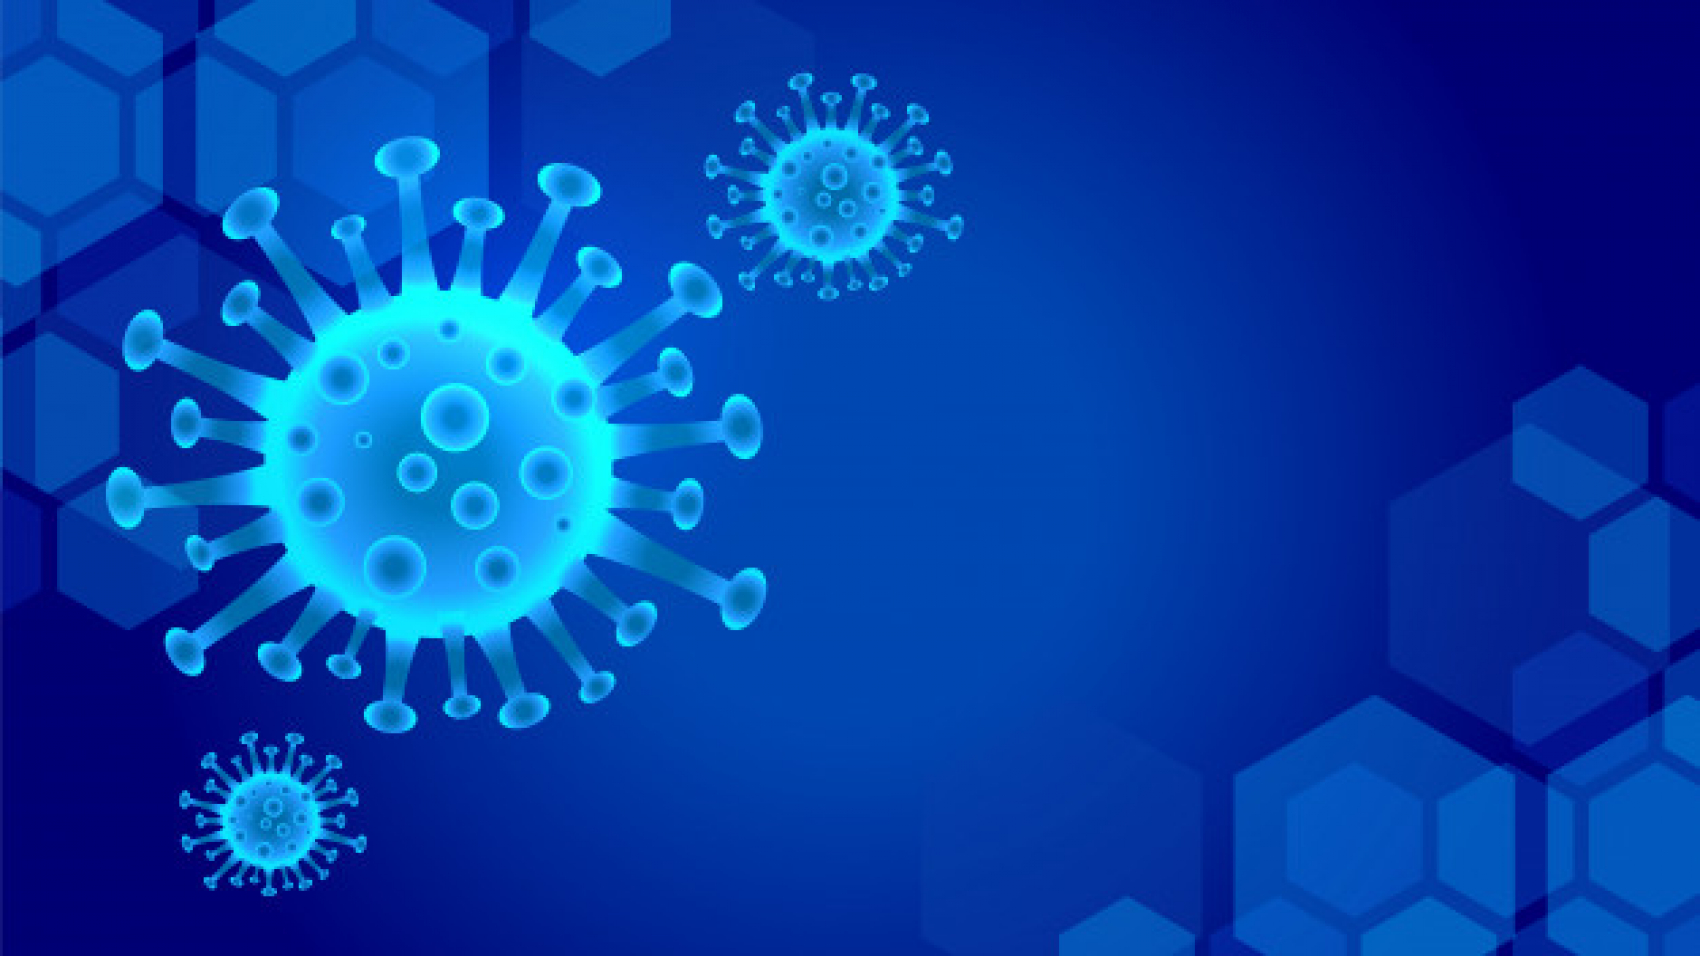 blue-coronavirus-covid-19-pandemic-outbreak-background-design_1017-24425